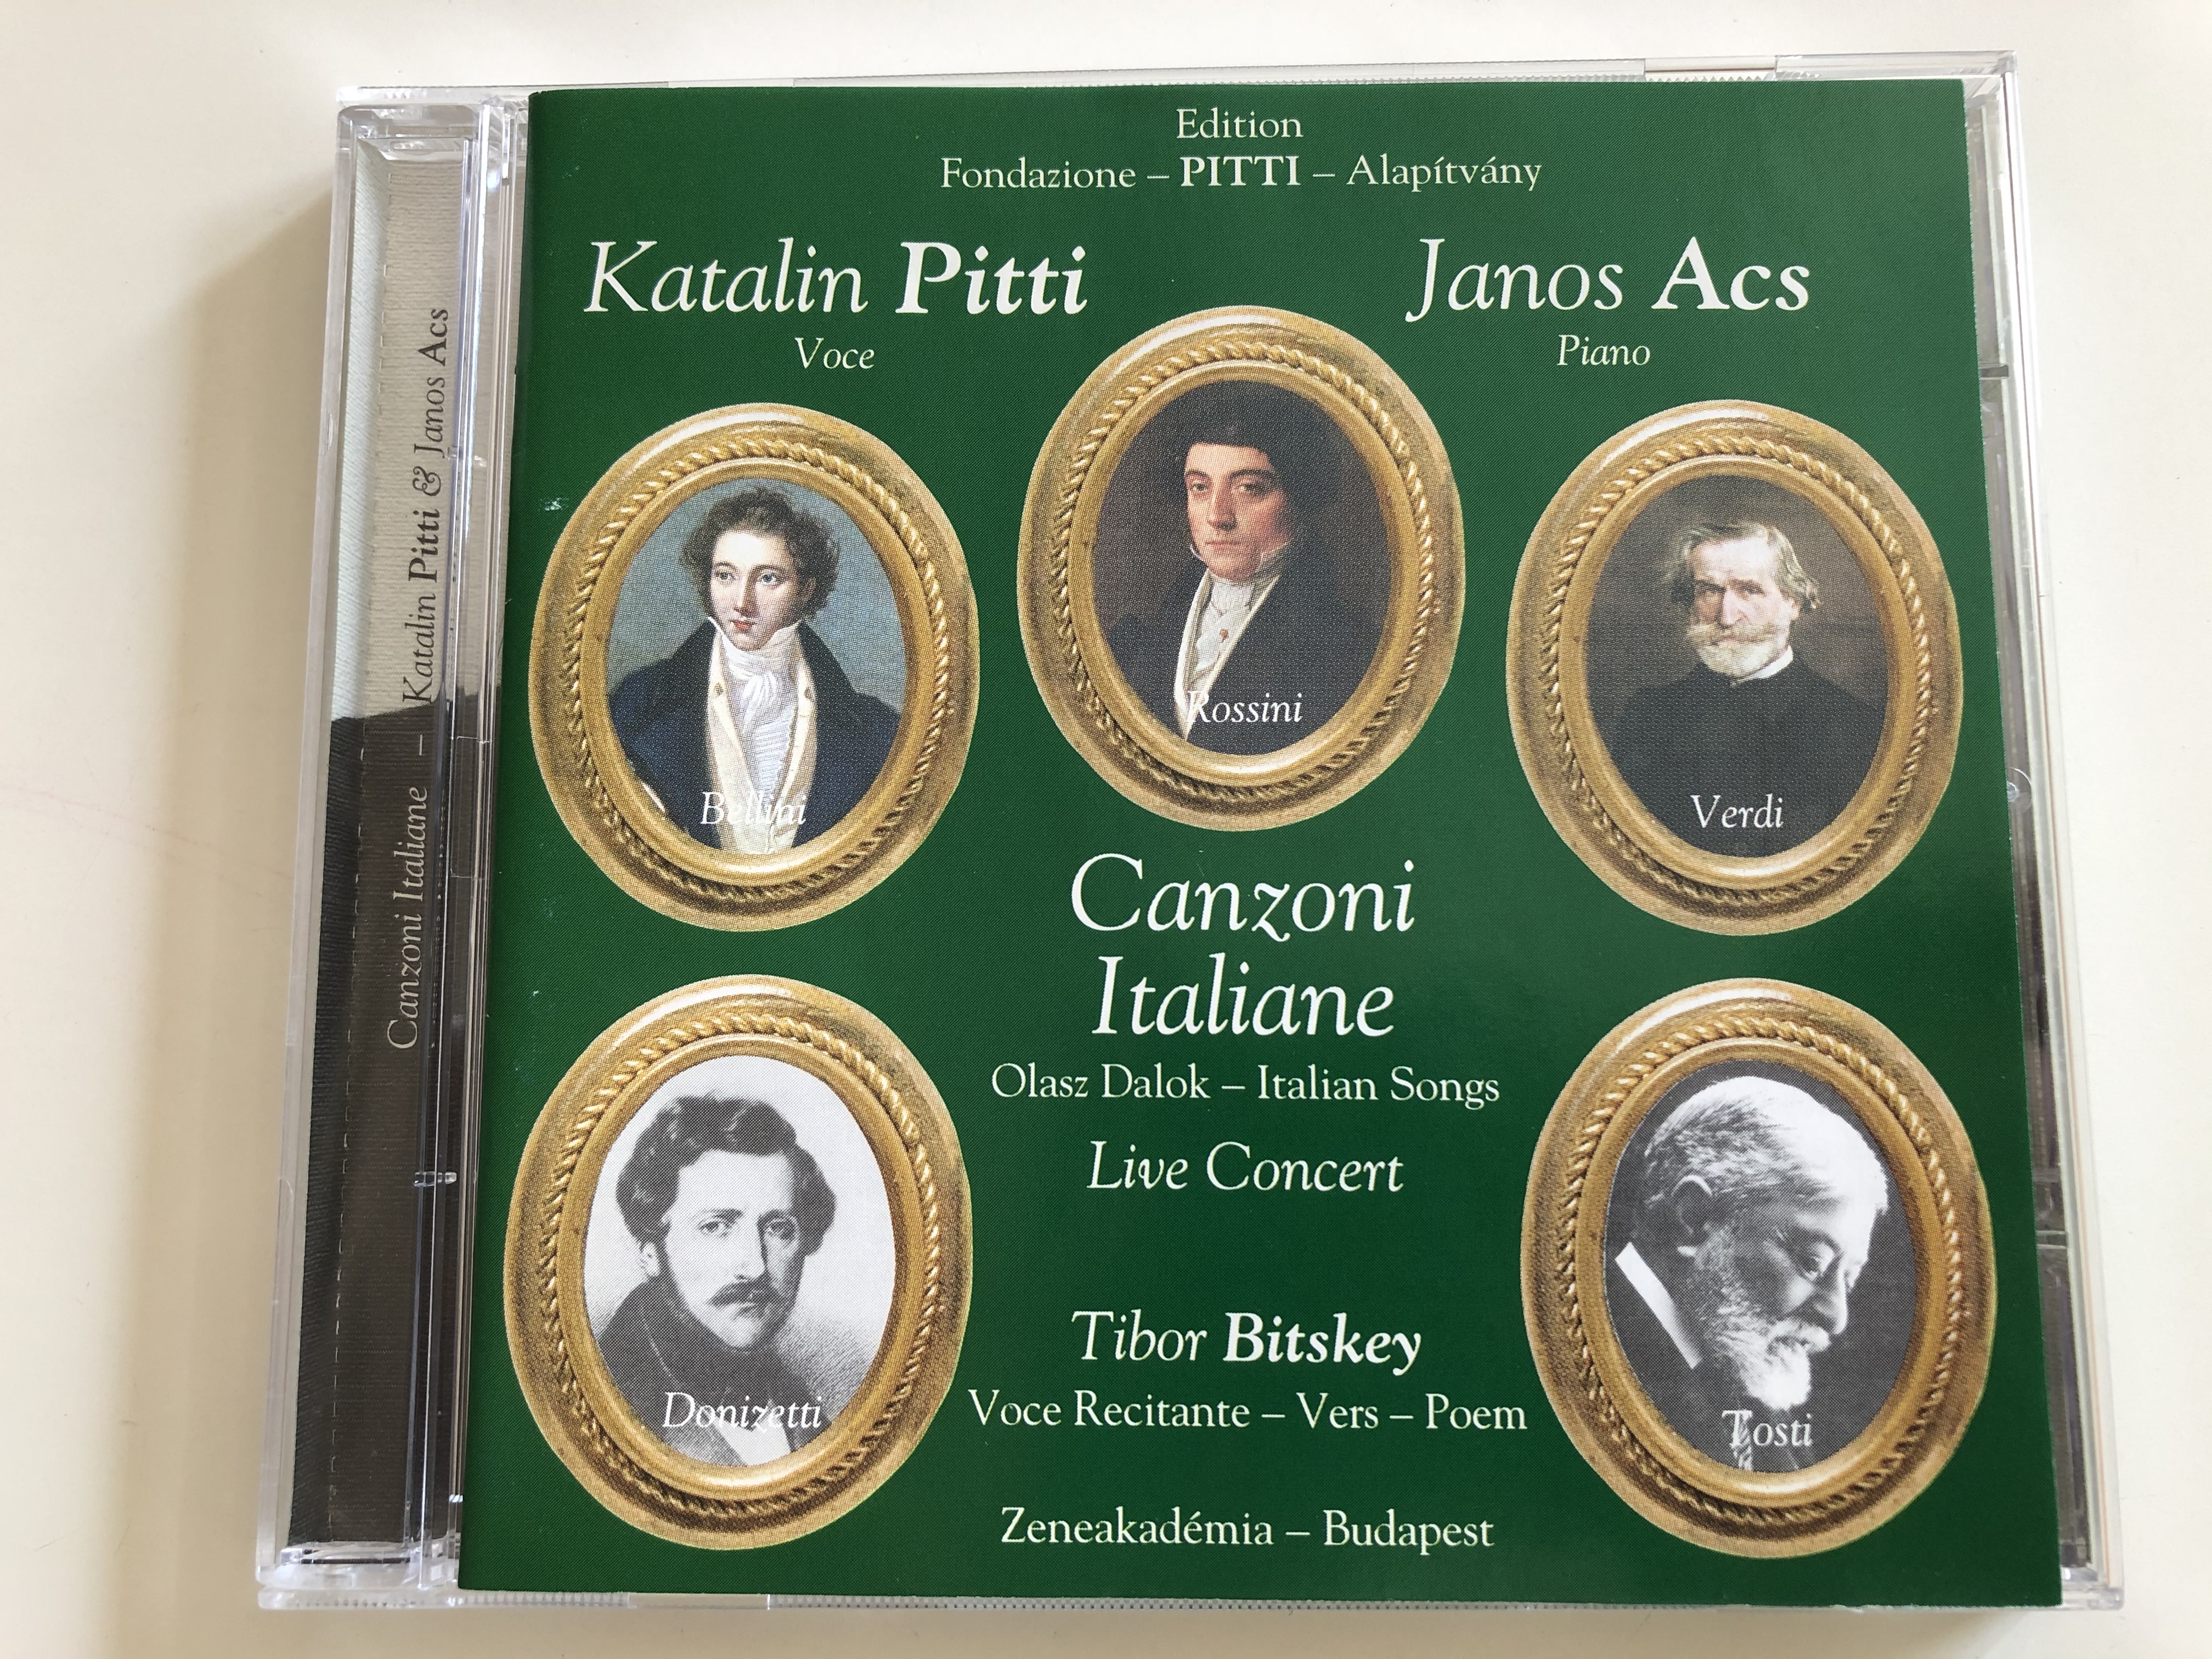 edition-fondazione-pitti-alapitvany-katalin-pitti-voce-janos-acs-piano-canzoni-italiane-olazs-dalok-italian-songs-live-concert-tibor-bitskey-voce-recitante-vers-poem-zenekade-1-.jpg